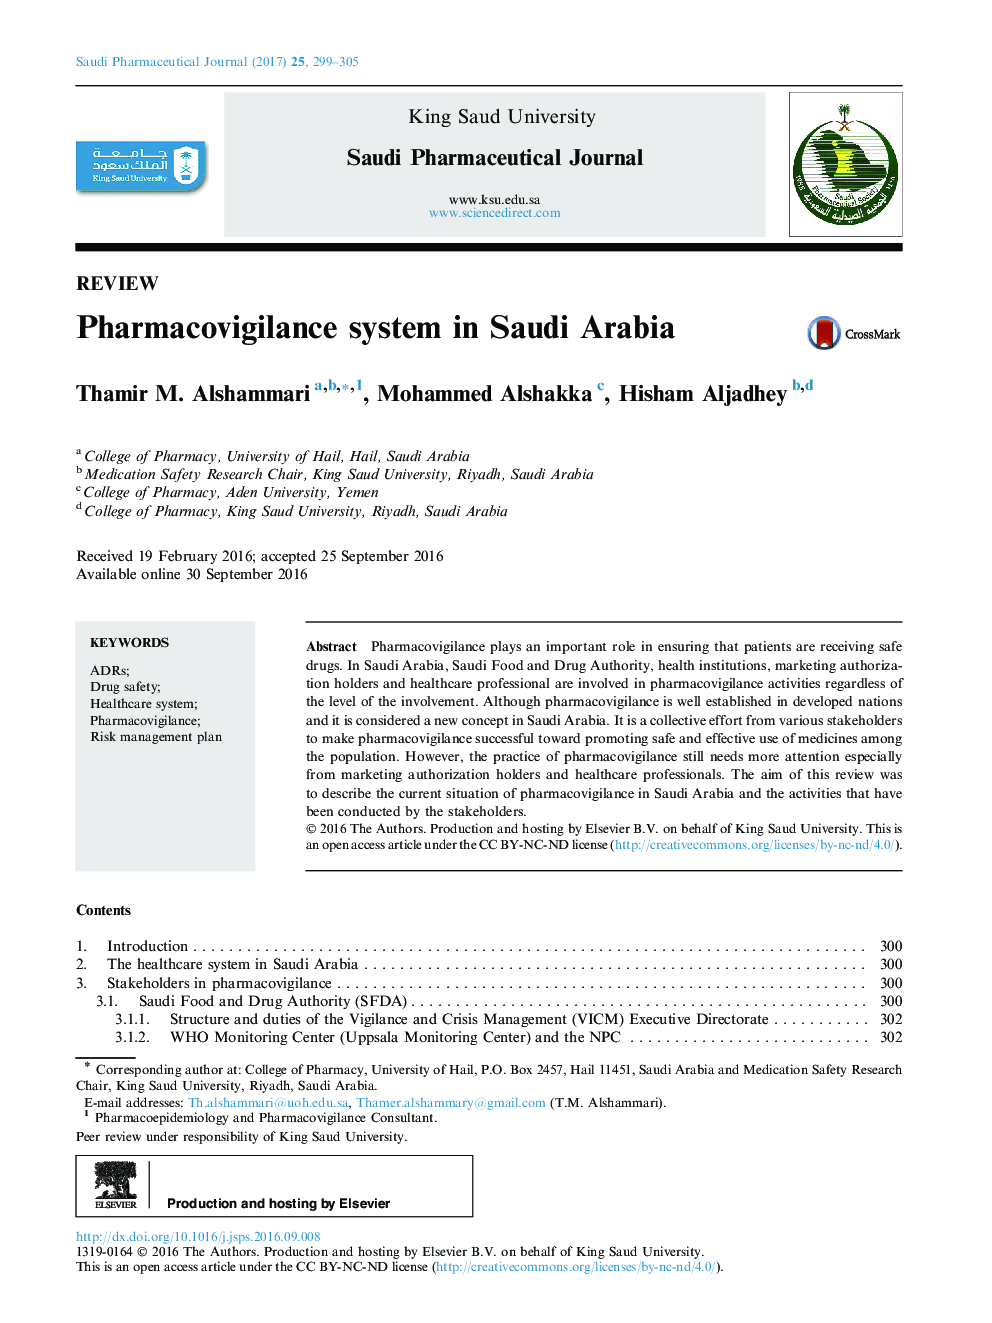 Pharmacovigilance system in Saudi Arabia